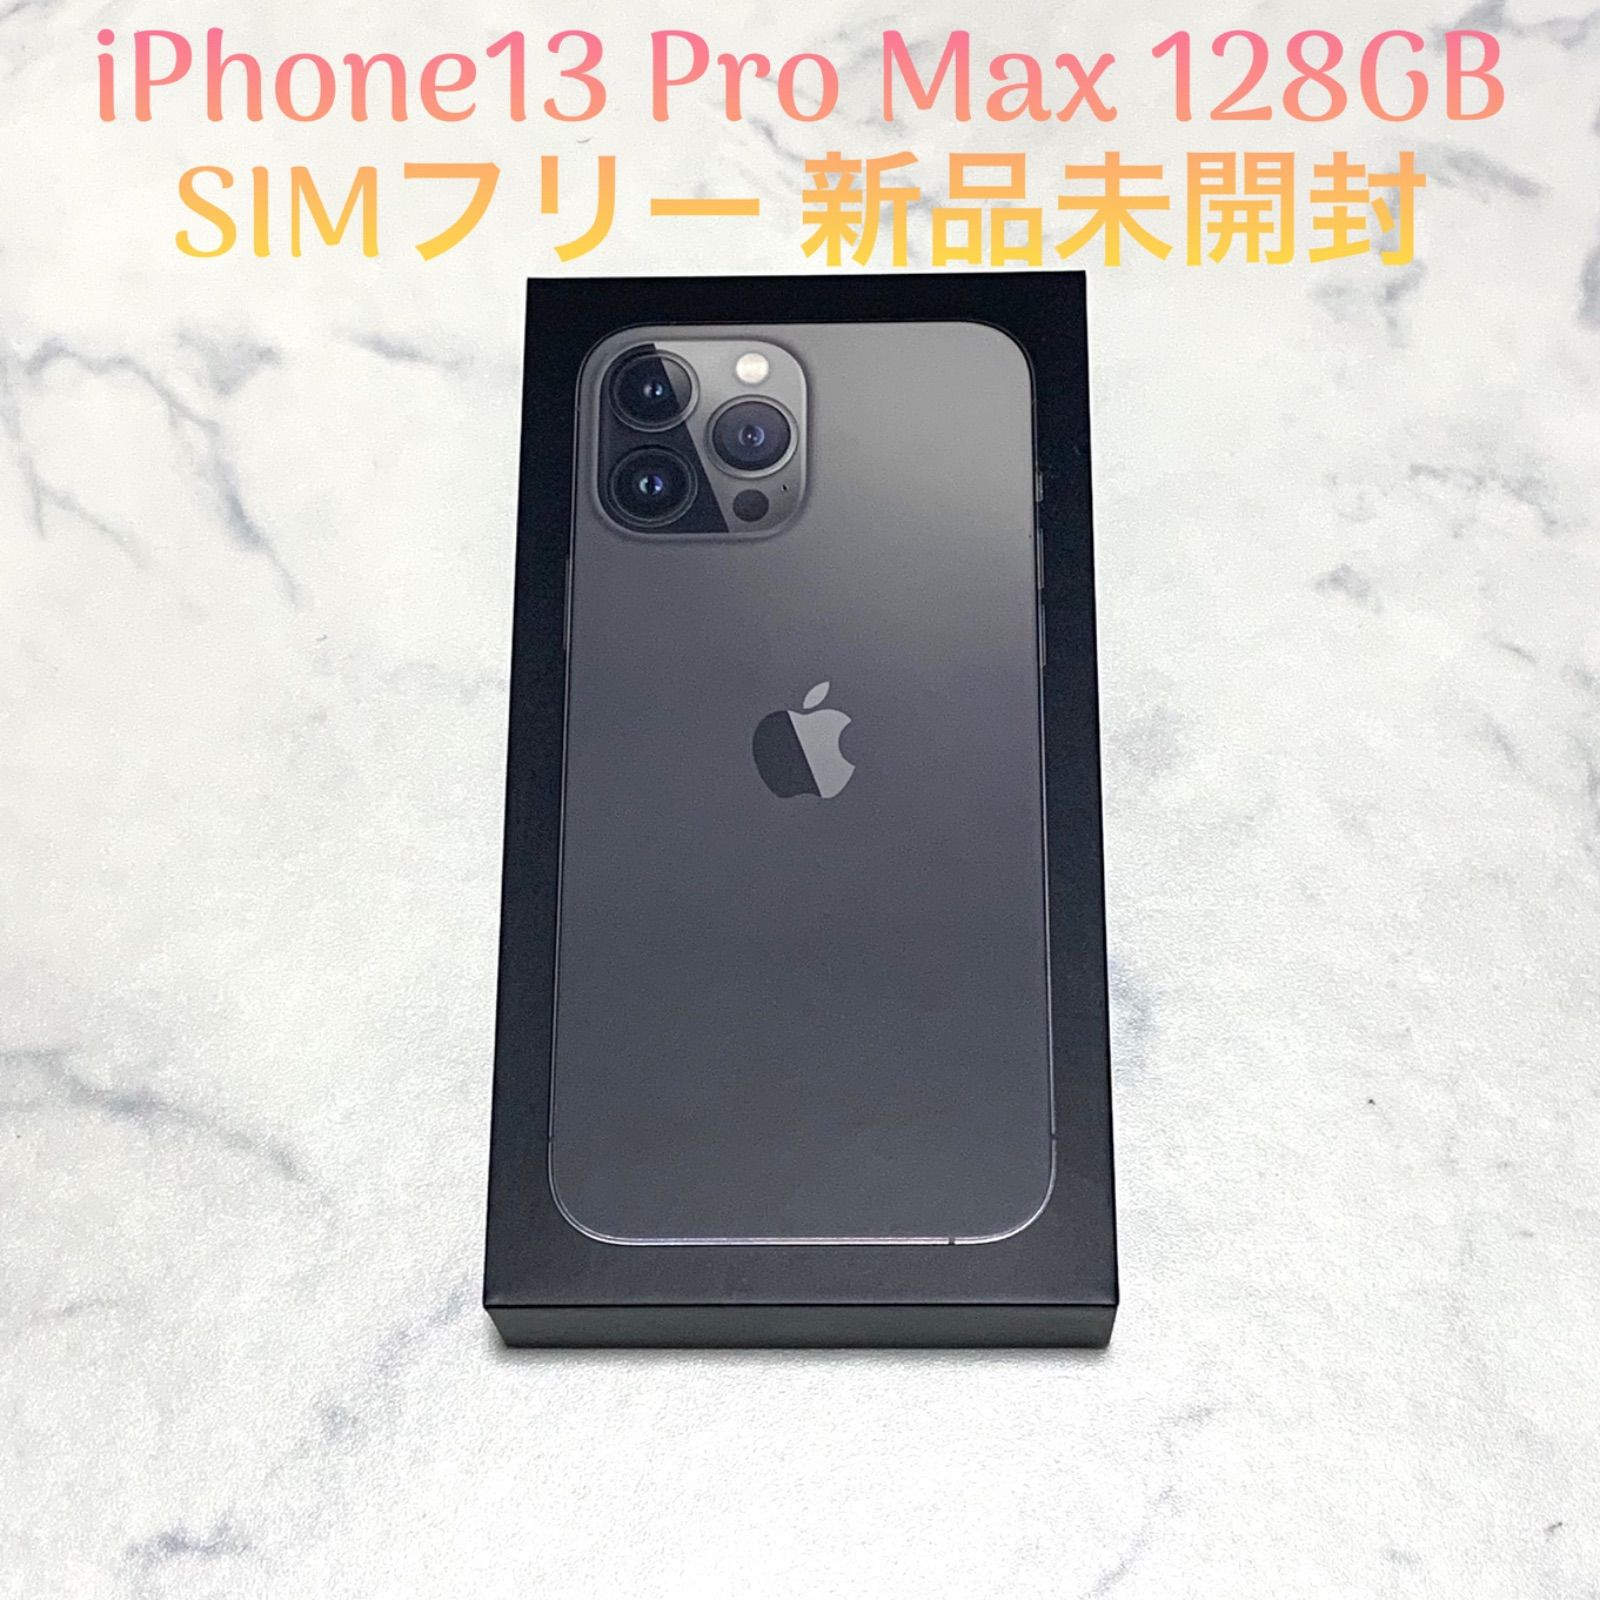 iPhone 13 Pro Max グラファイト 128 GB SIMフリー-